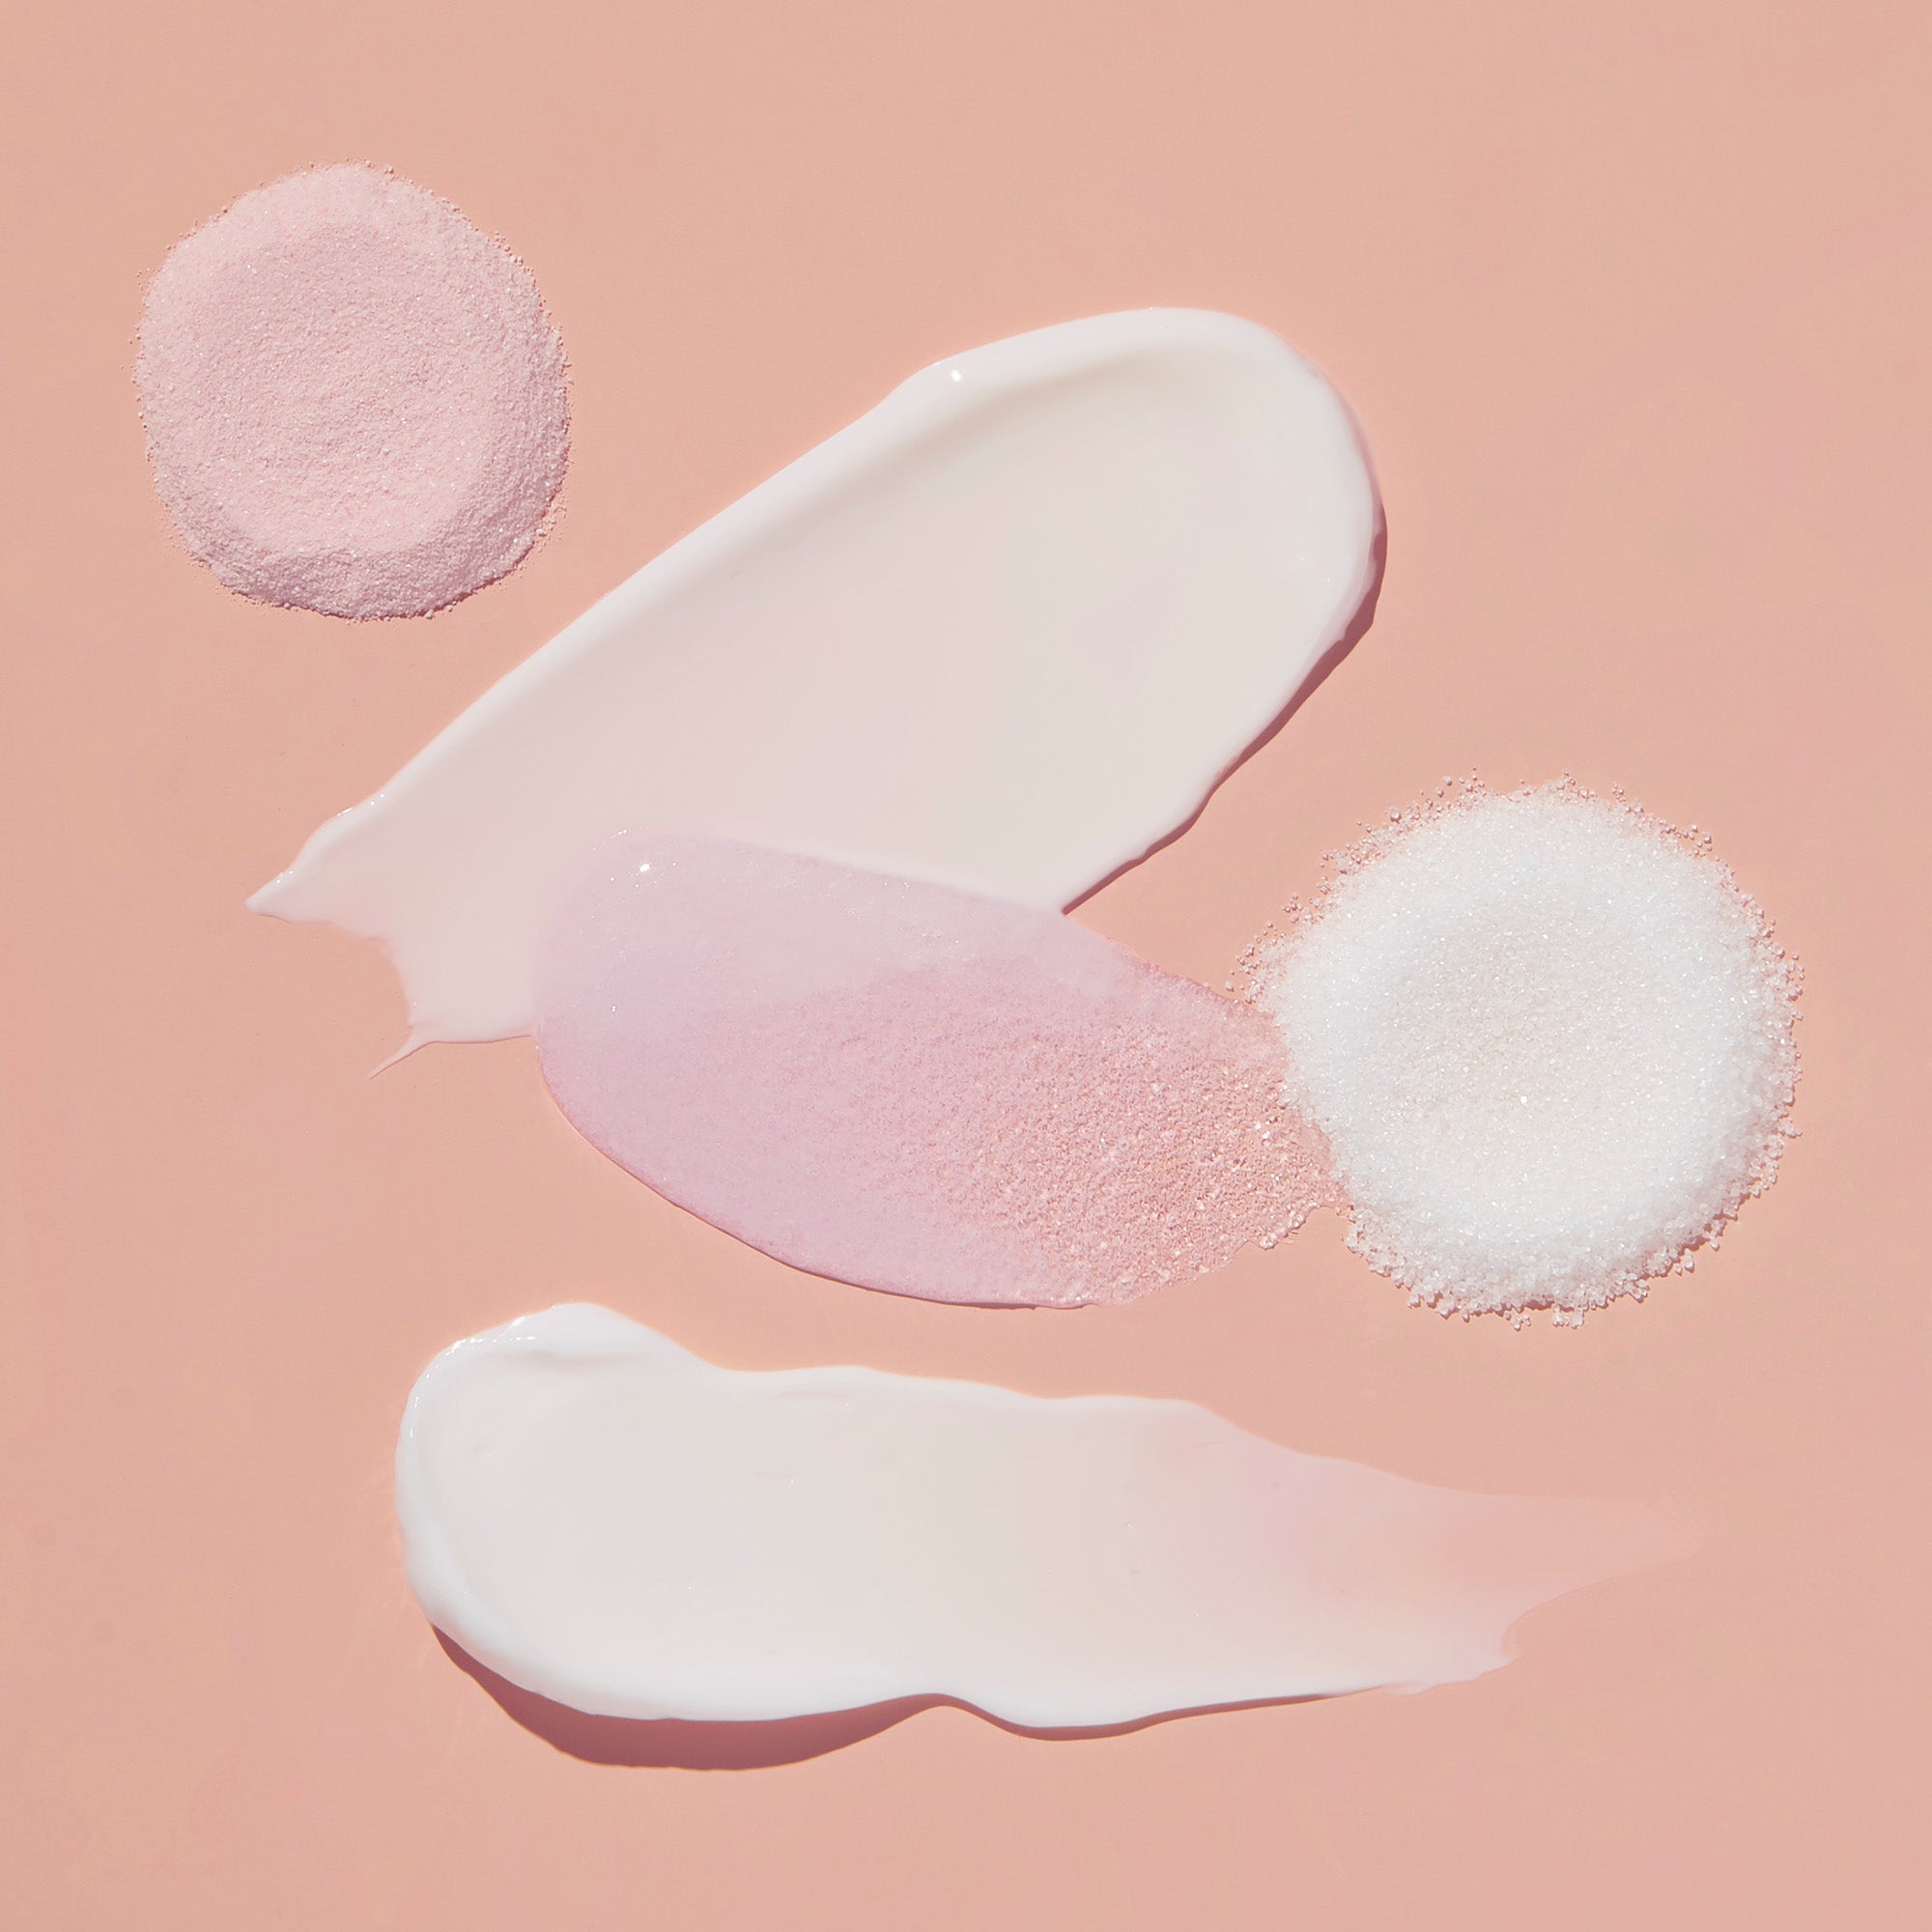 Product texture of Fizz powder, Salt, Scrub Mud masque, Massage butter on light pink background